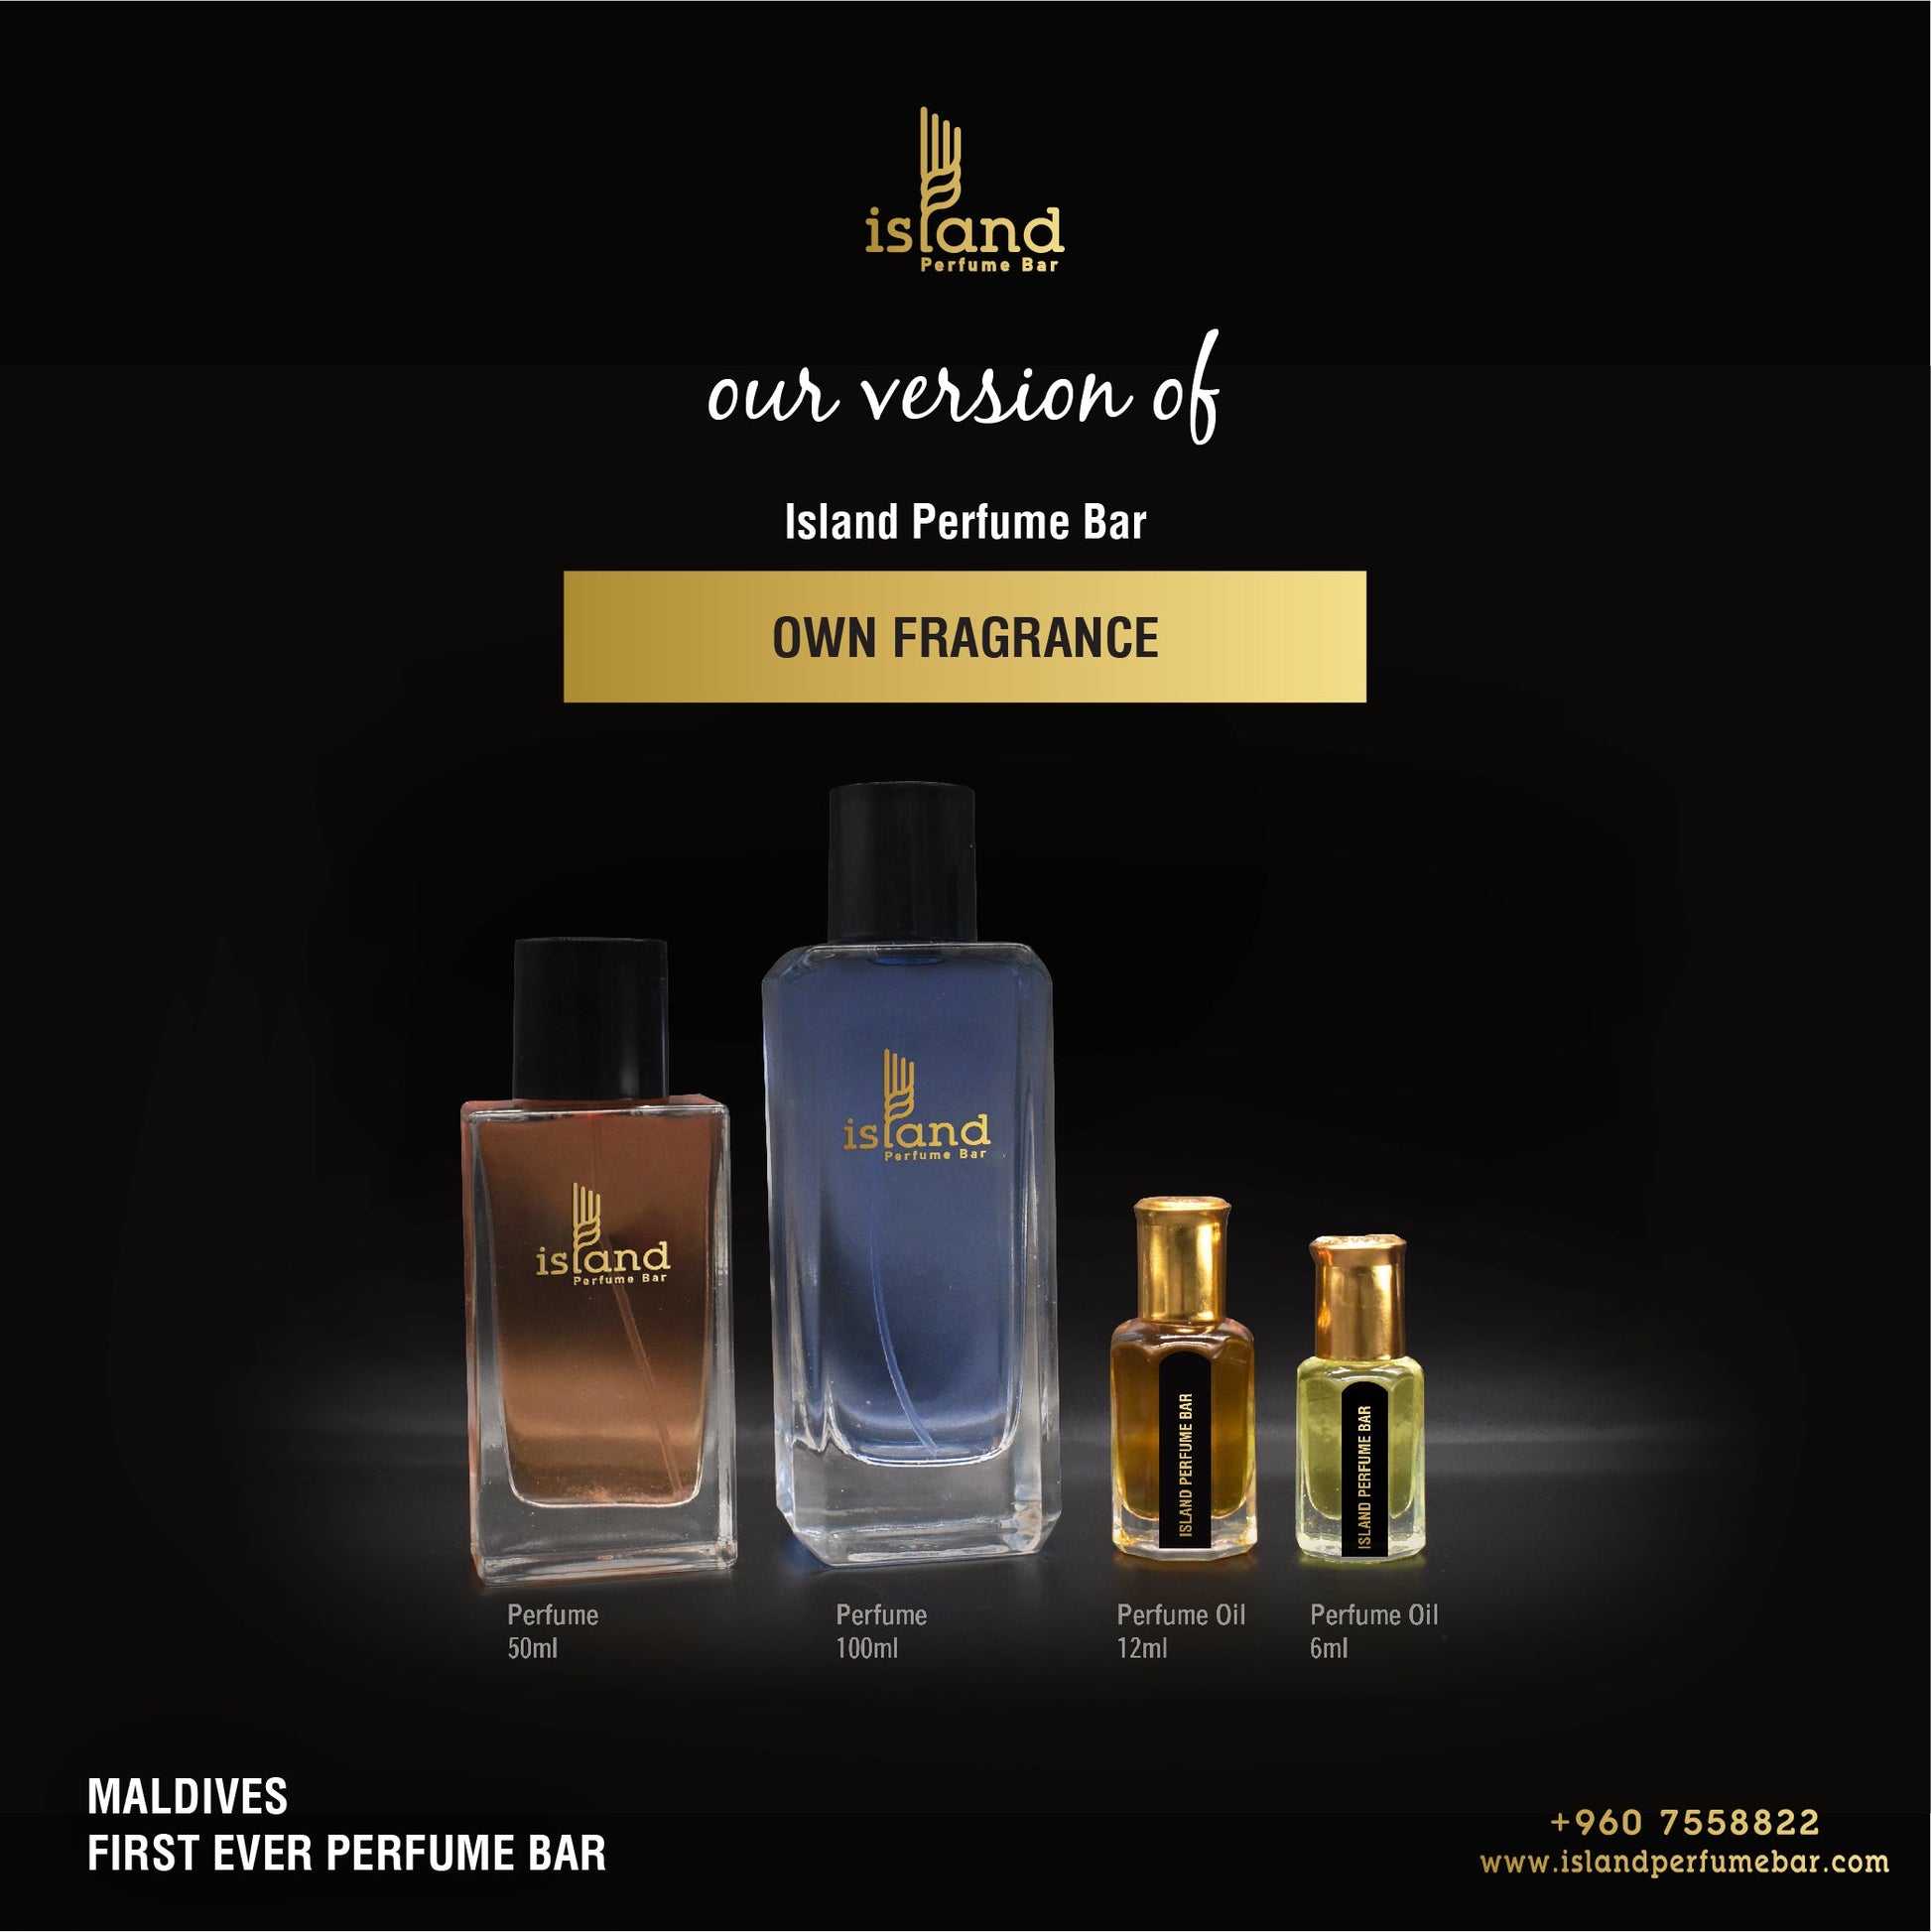 New Perfume Attrape-Rêves, Women's Fragrances